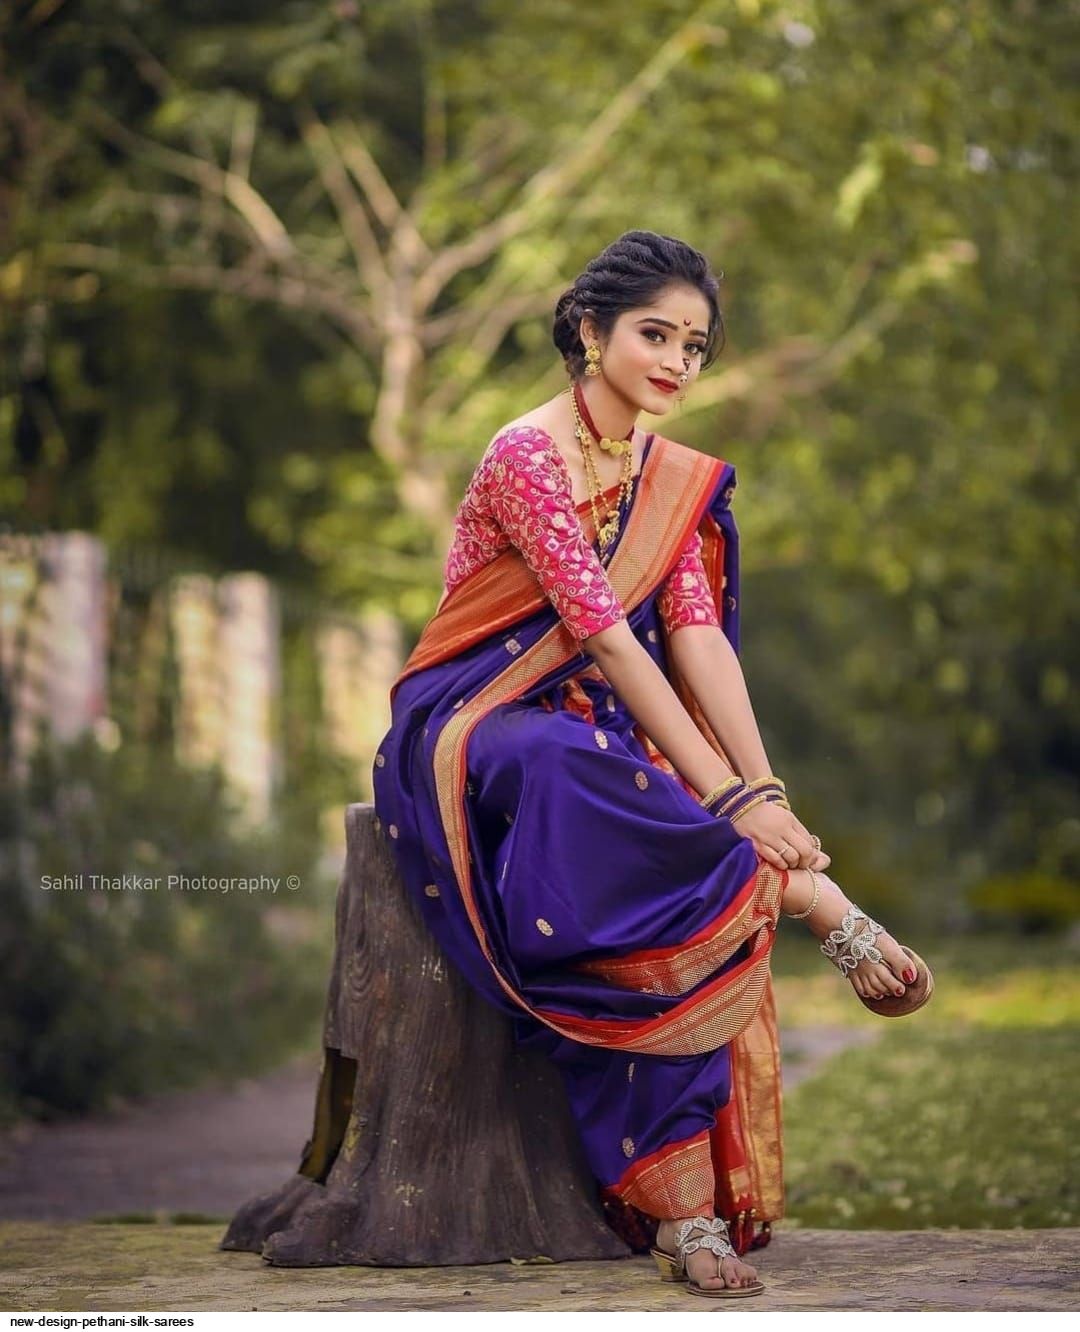 Jui Gadkari's traditional saree looks | Times of India